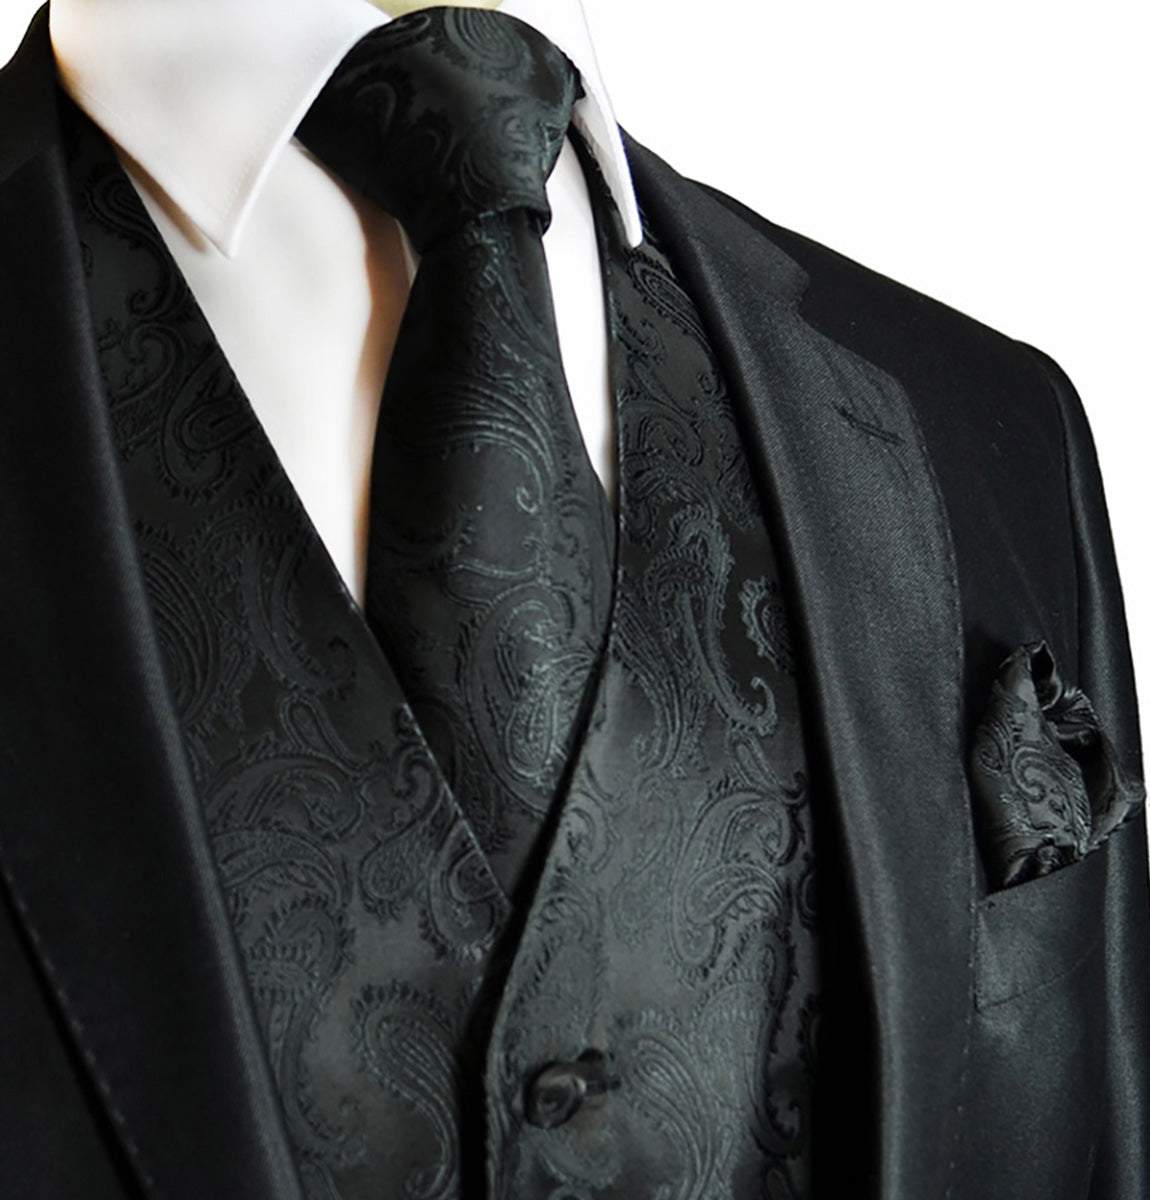 black vest with black suits black ties